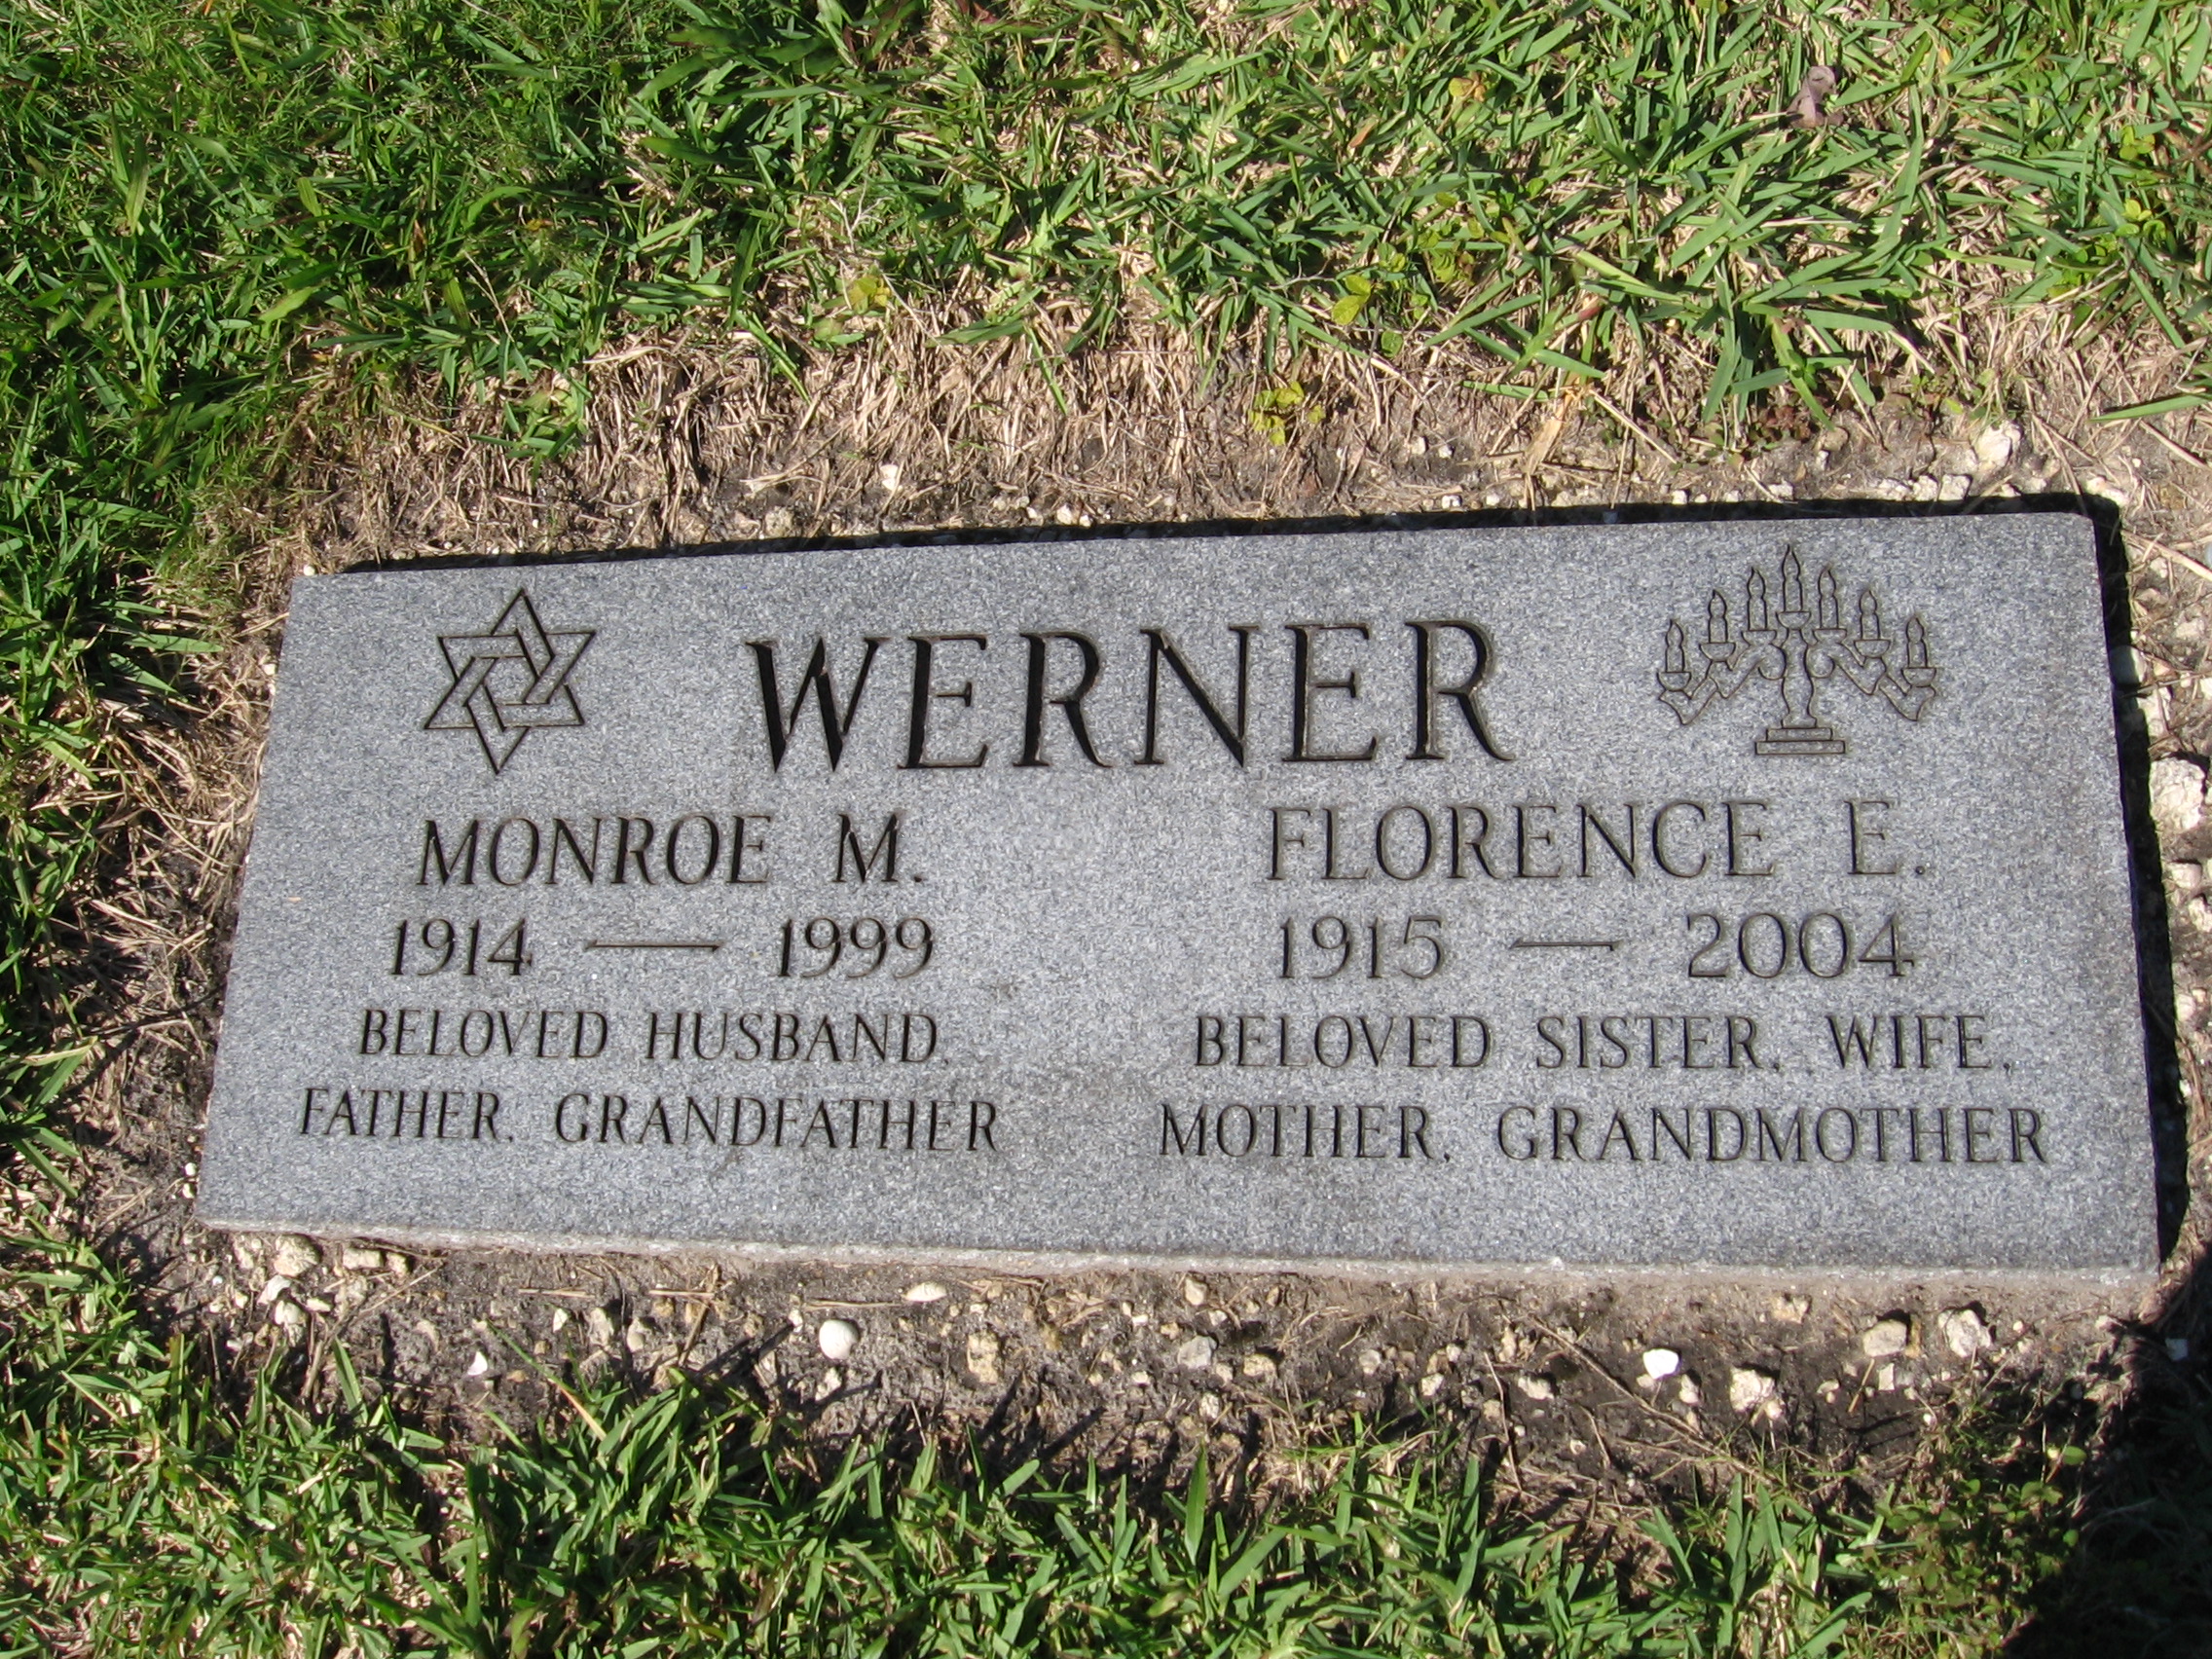 Monroe M Werner